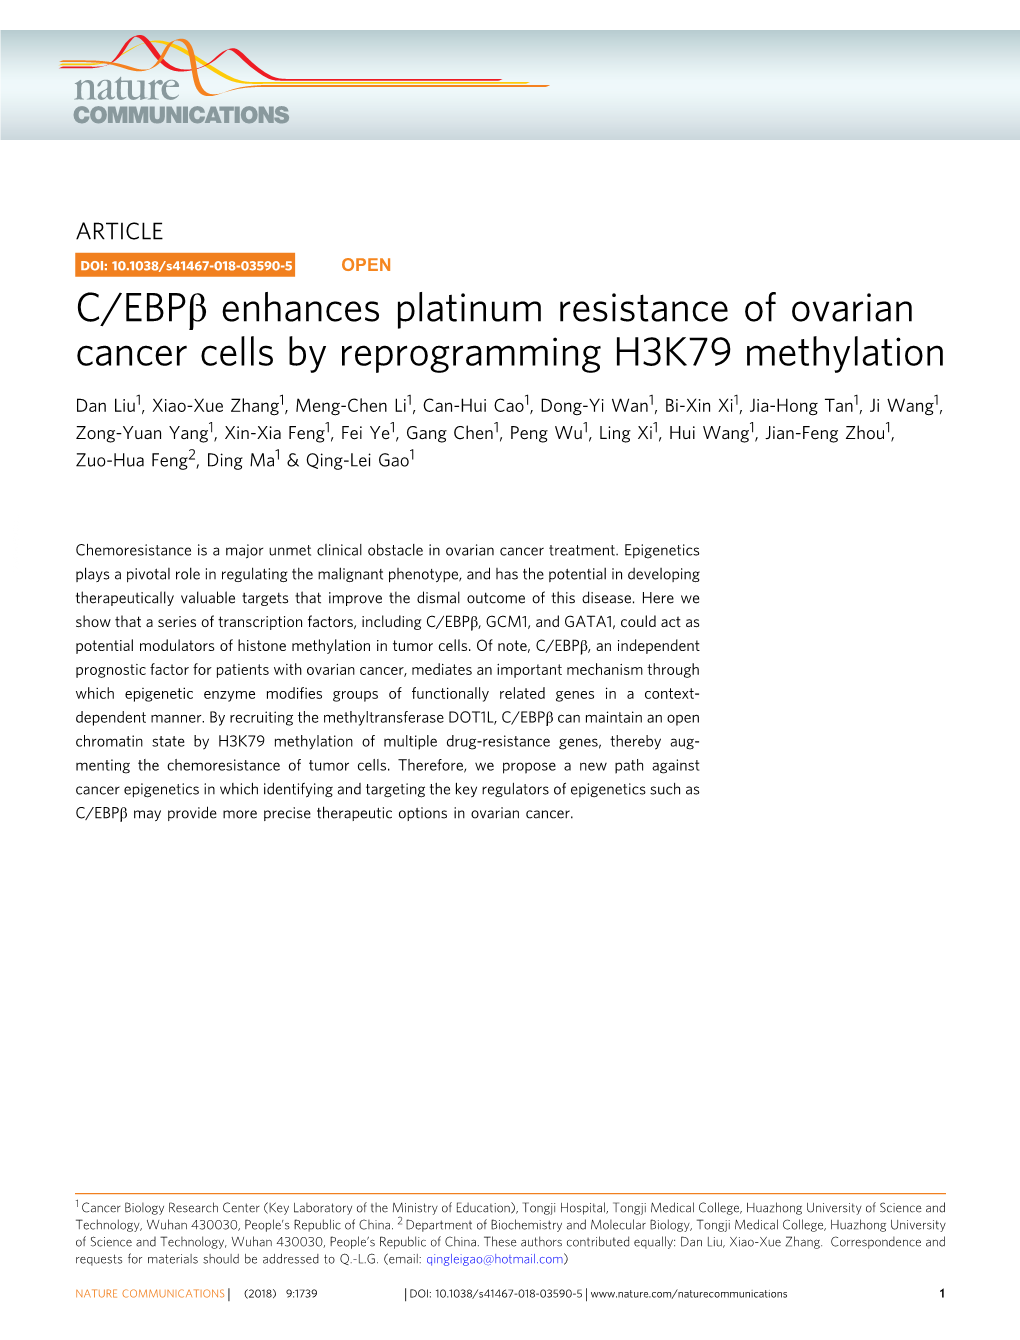 C/EBPÎ² Enhances Platinum Resistance of Ovarian Cancer Cells By